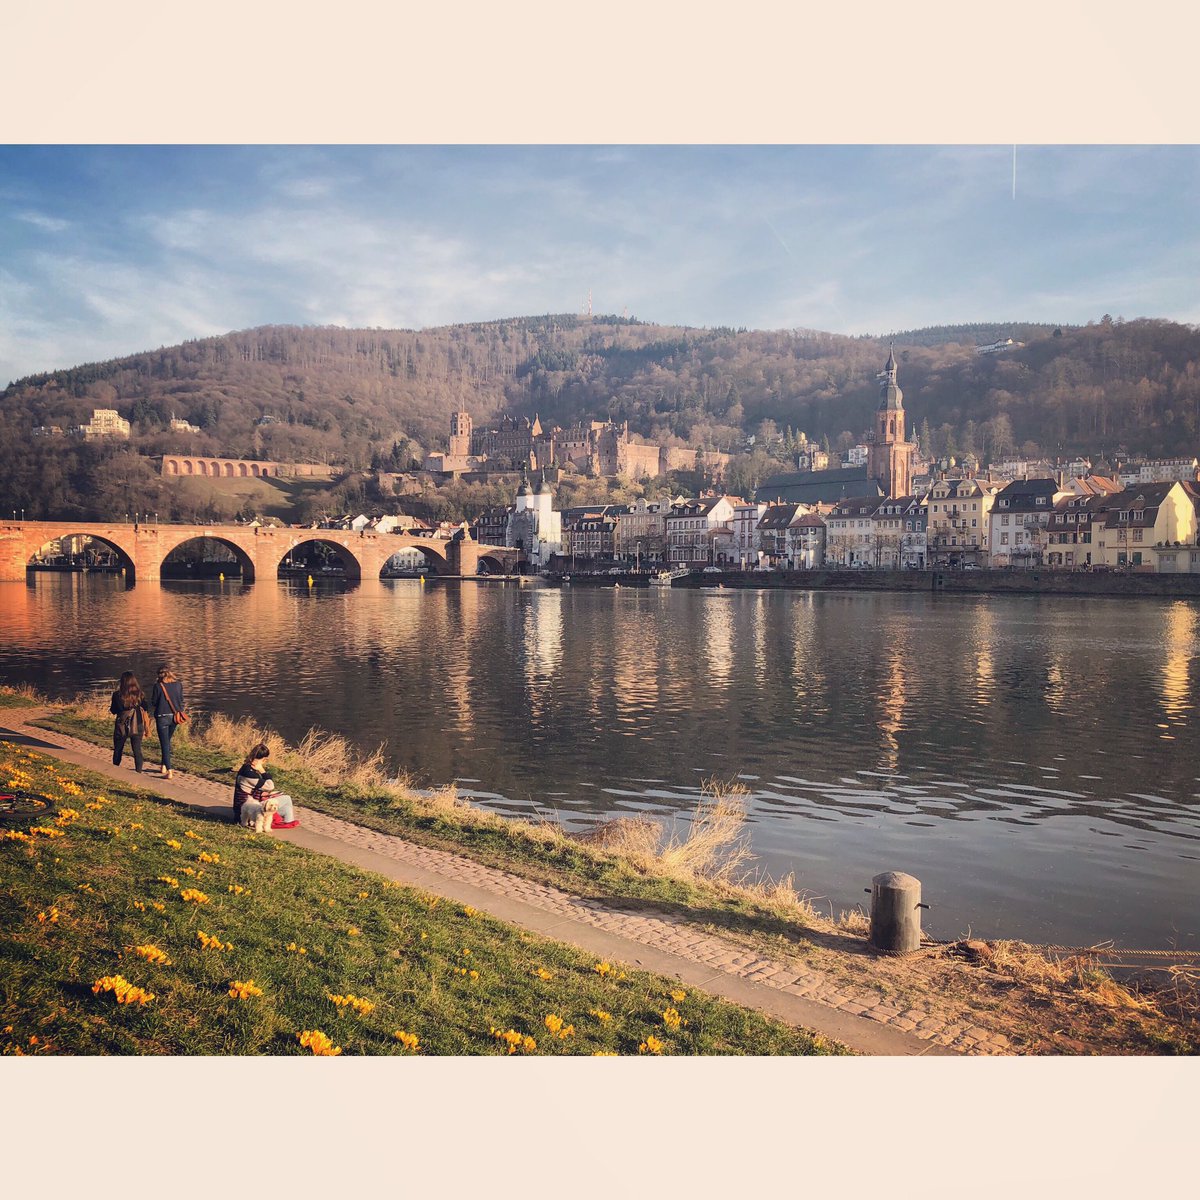 Hallo Heidelberg!🦢🏰🇩🇪
#Sunset #Selfie #Me #Man #Guy #AlteBrückeHeidelberg #Neckar #Altstadt #SchlossHeidelberg #Heidelberg #BadenWürttemberg #Deutschland #Germany